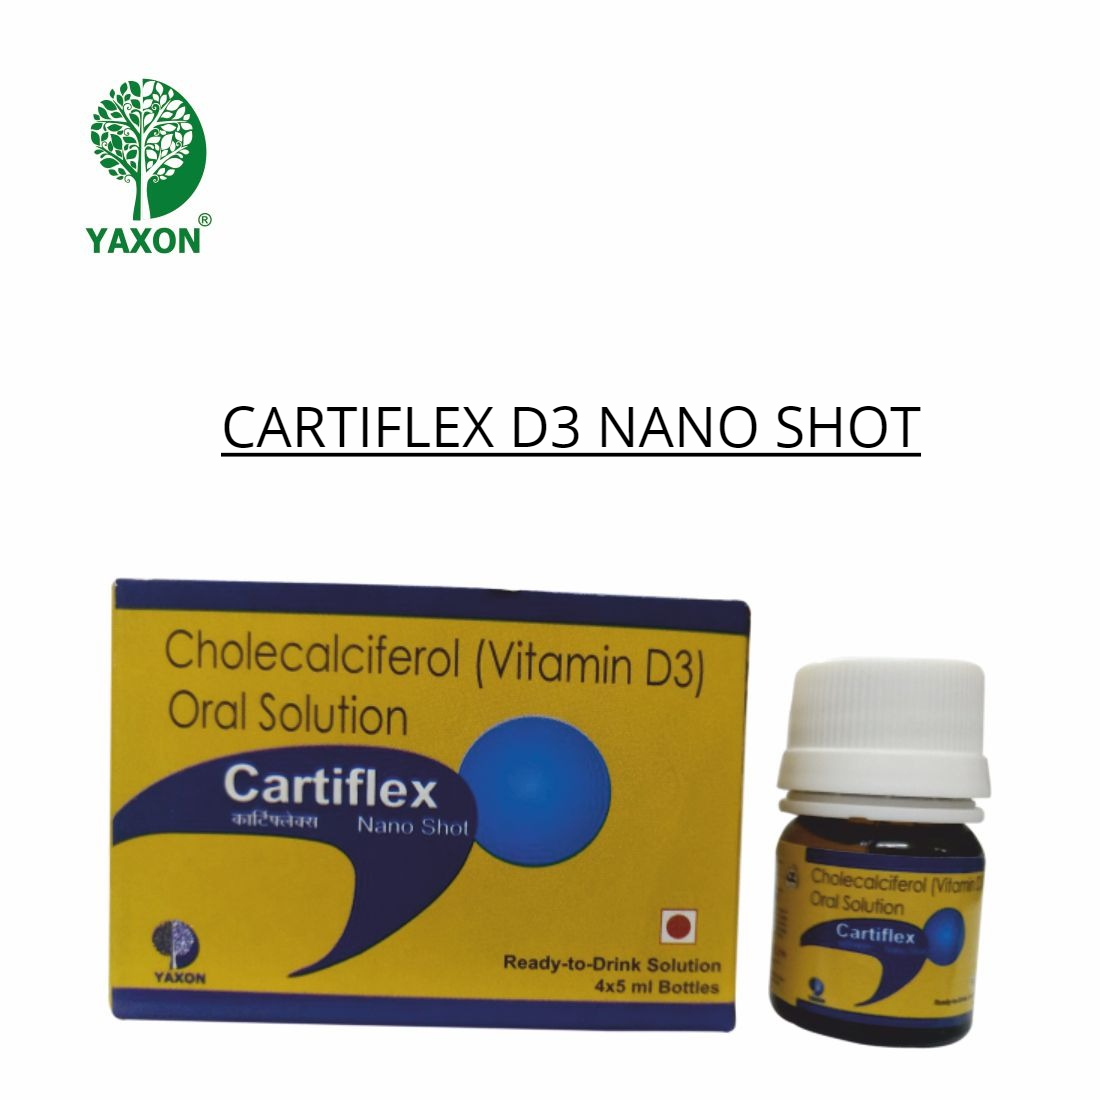 YAXON CARTIFLEX D3 NANO SHOT Syrup